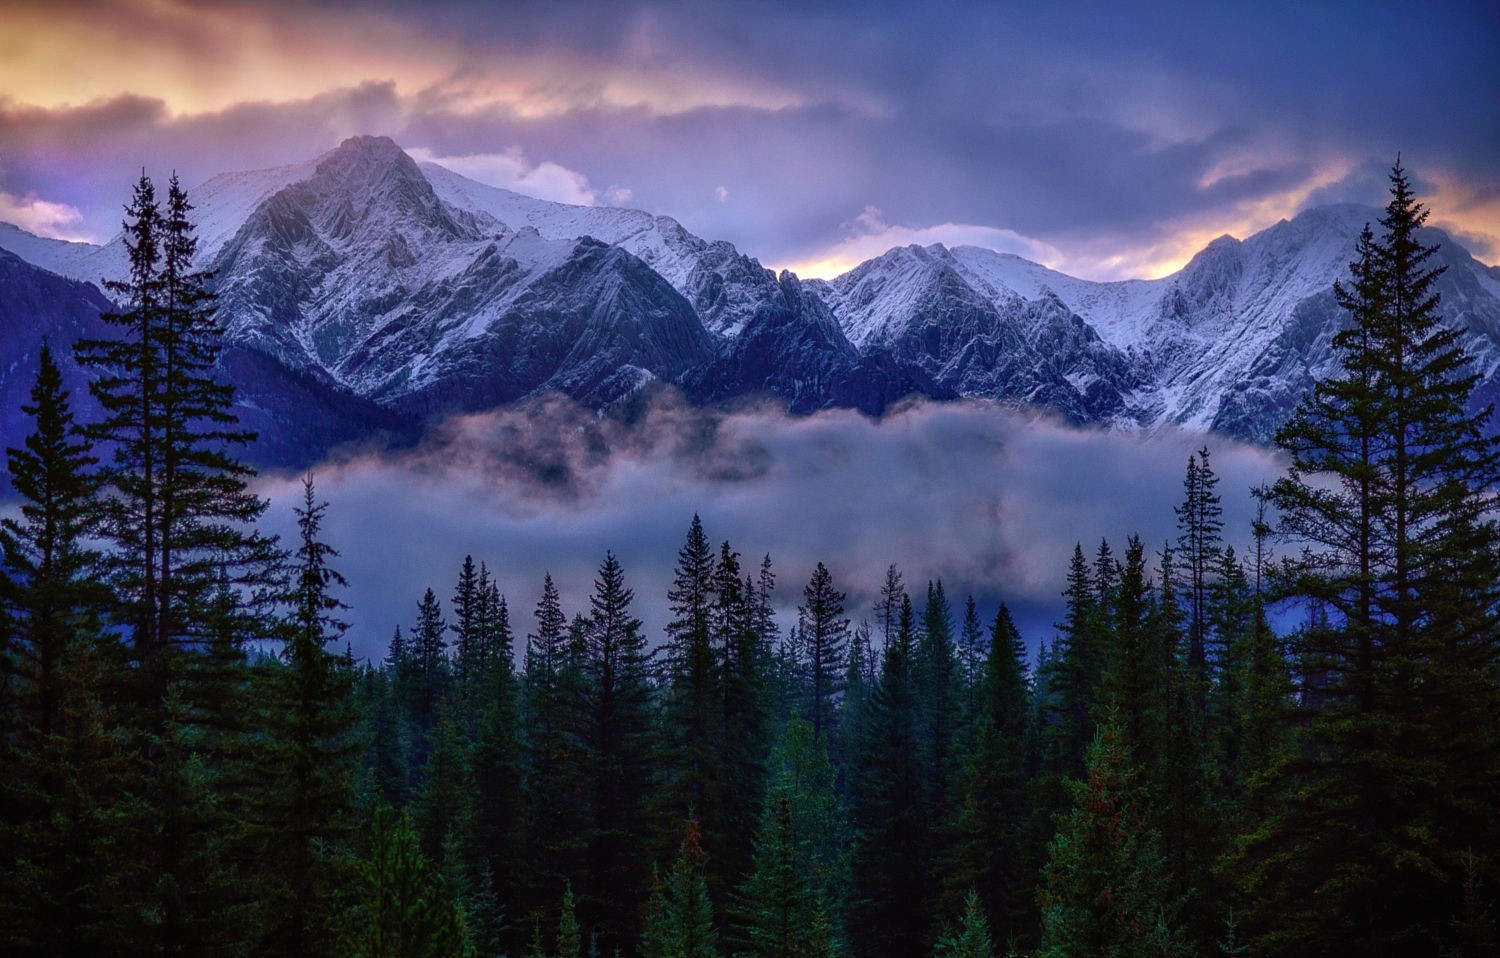 Photography Nature Landscape Snowy Peak Mountains Forest Mist Clouds Sunlight Pine Trees Sunrise Ban 1500x958